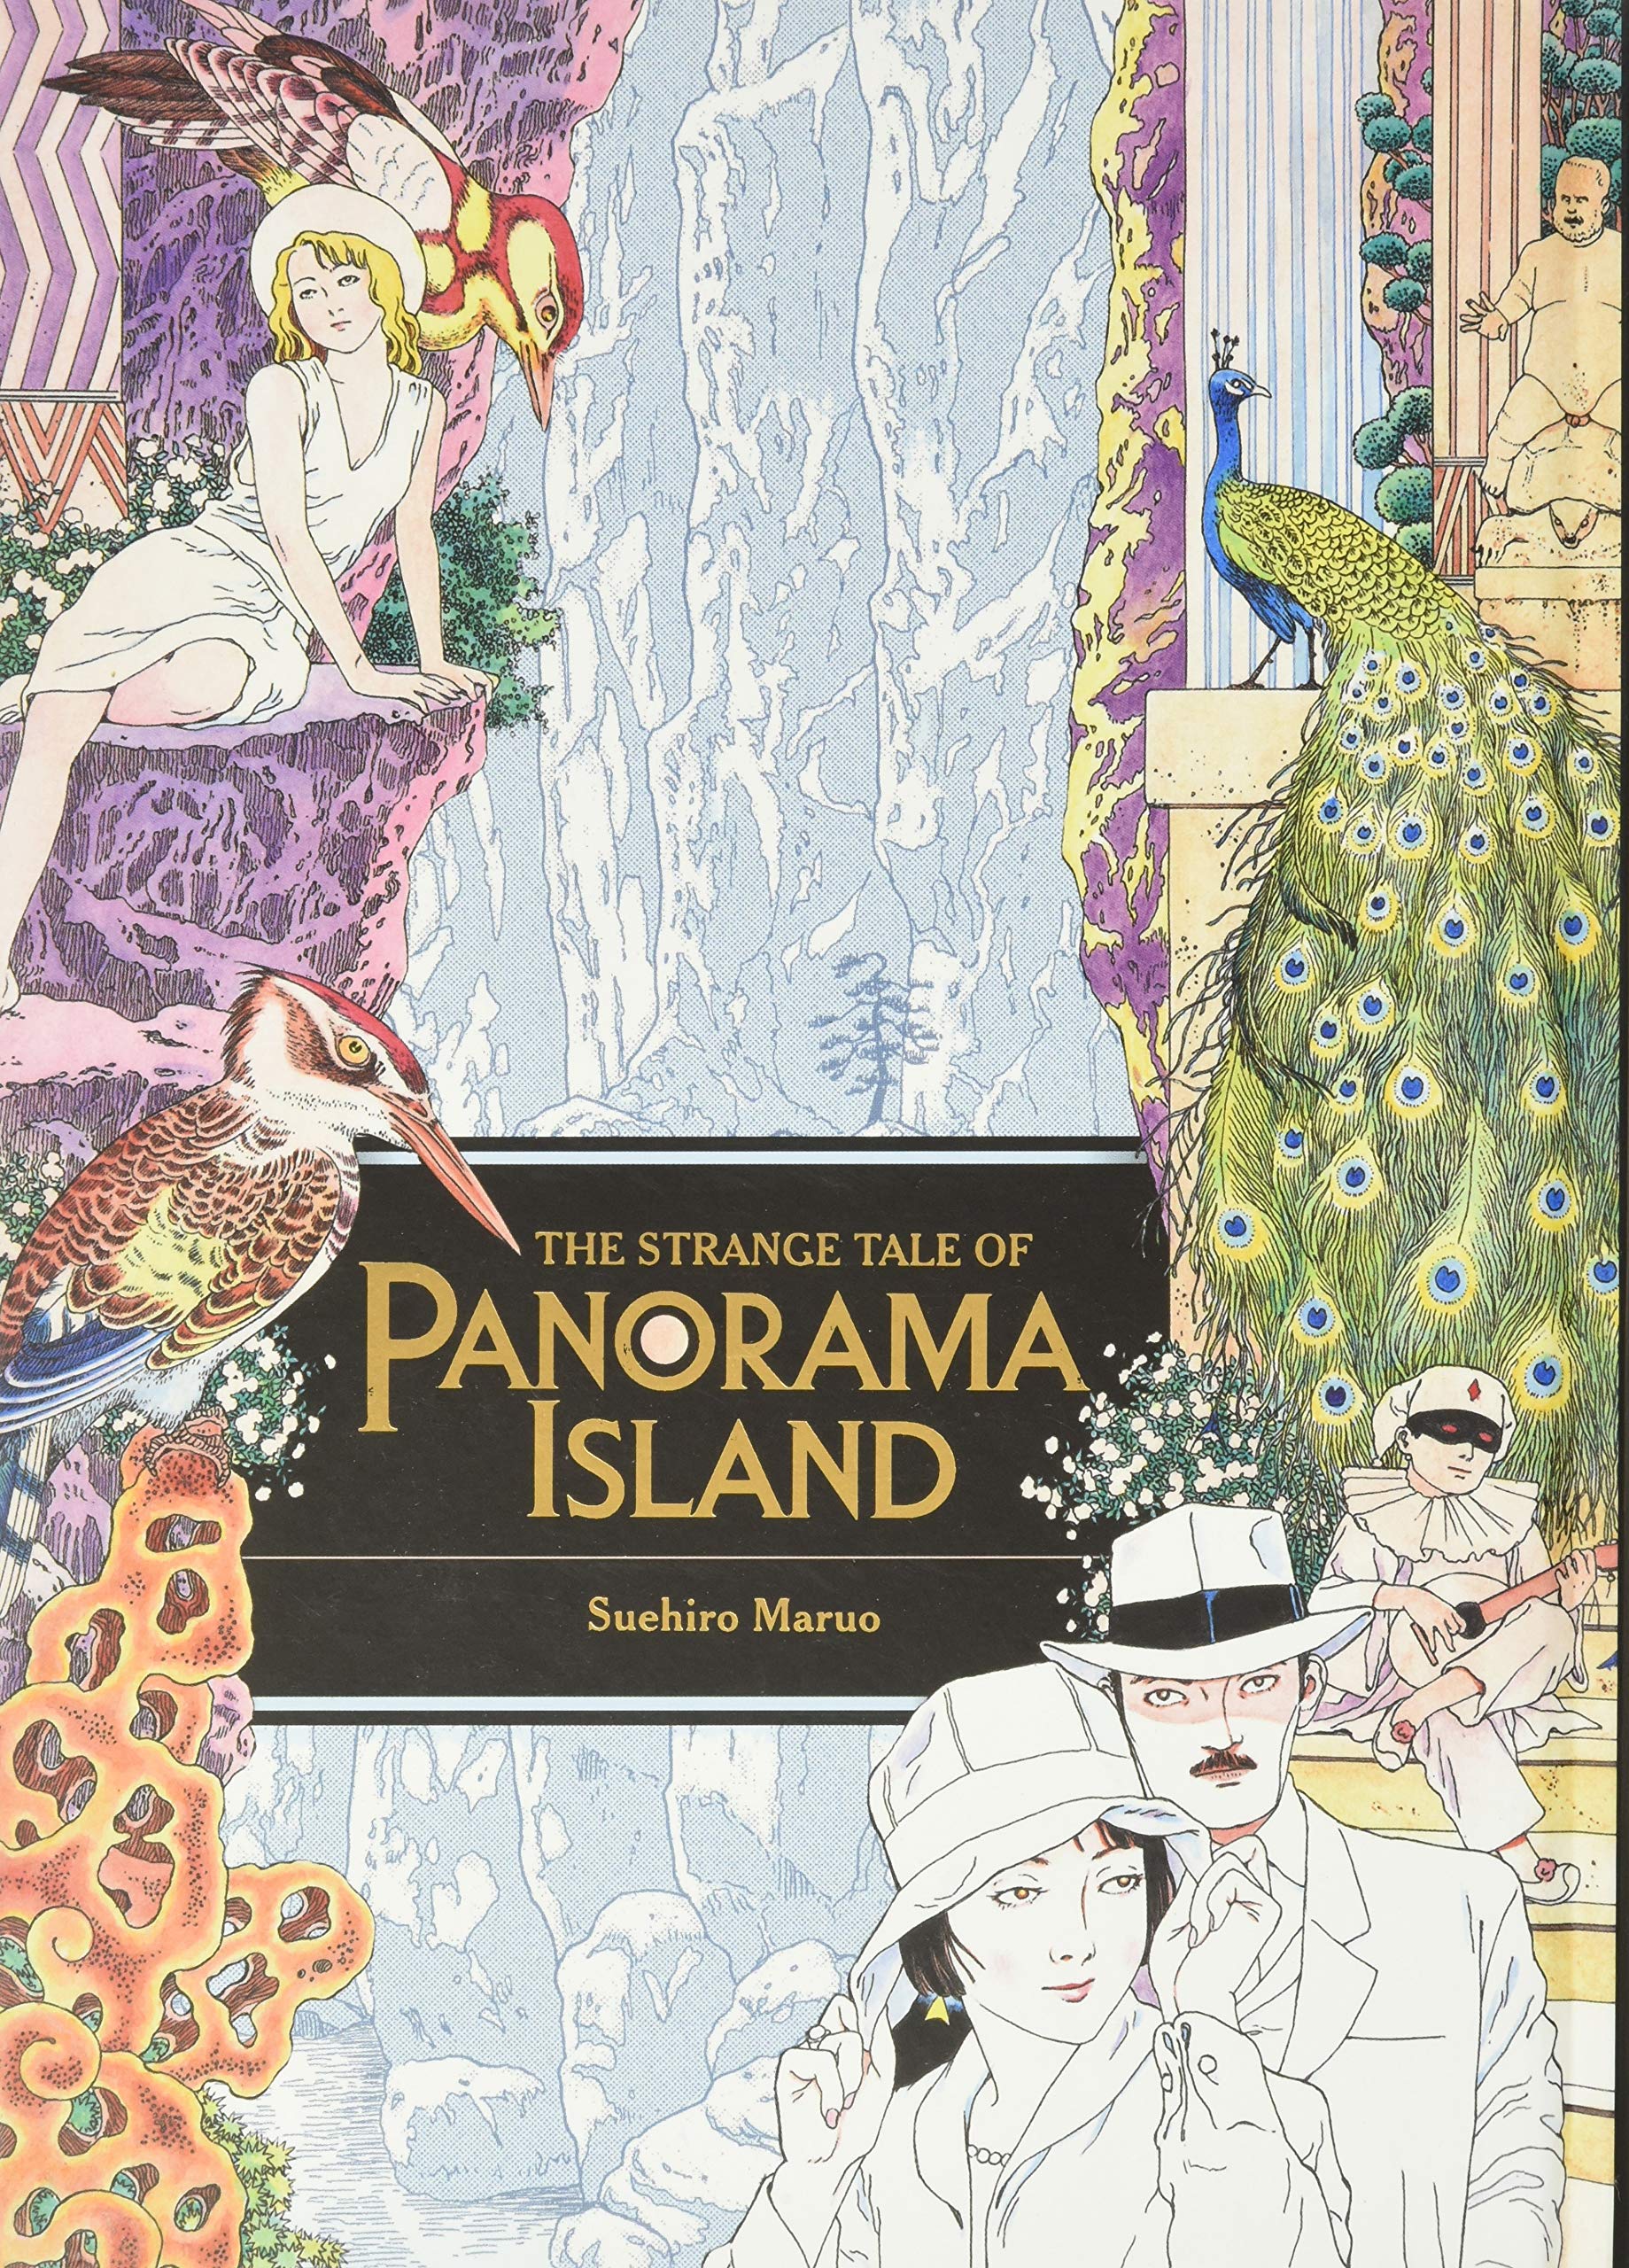 Suehiro Maruo "The Strange Tale of Panorama Island"